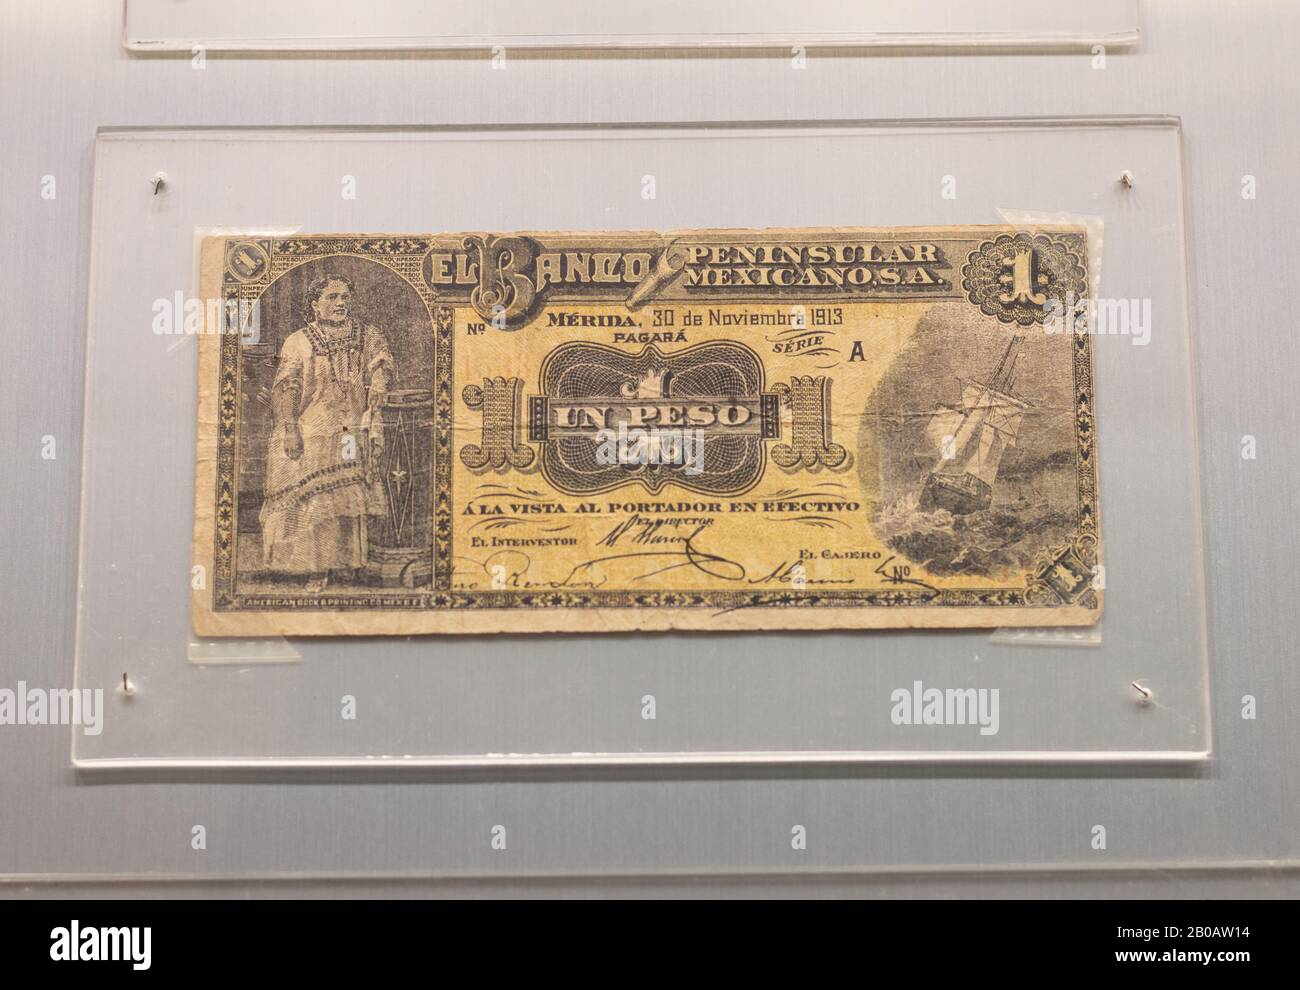 Vieux billets de banque mexicains, monnaie, argent, de la Banco Peninsular Mexicano. Merida, Yucatan, Mexique, 1913. Banque D'Images